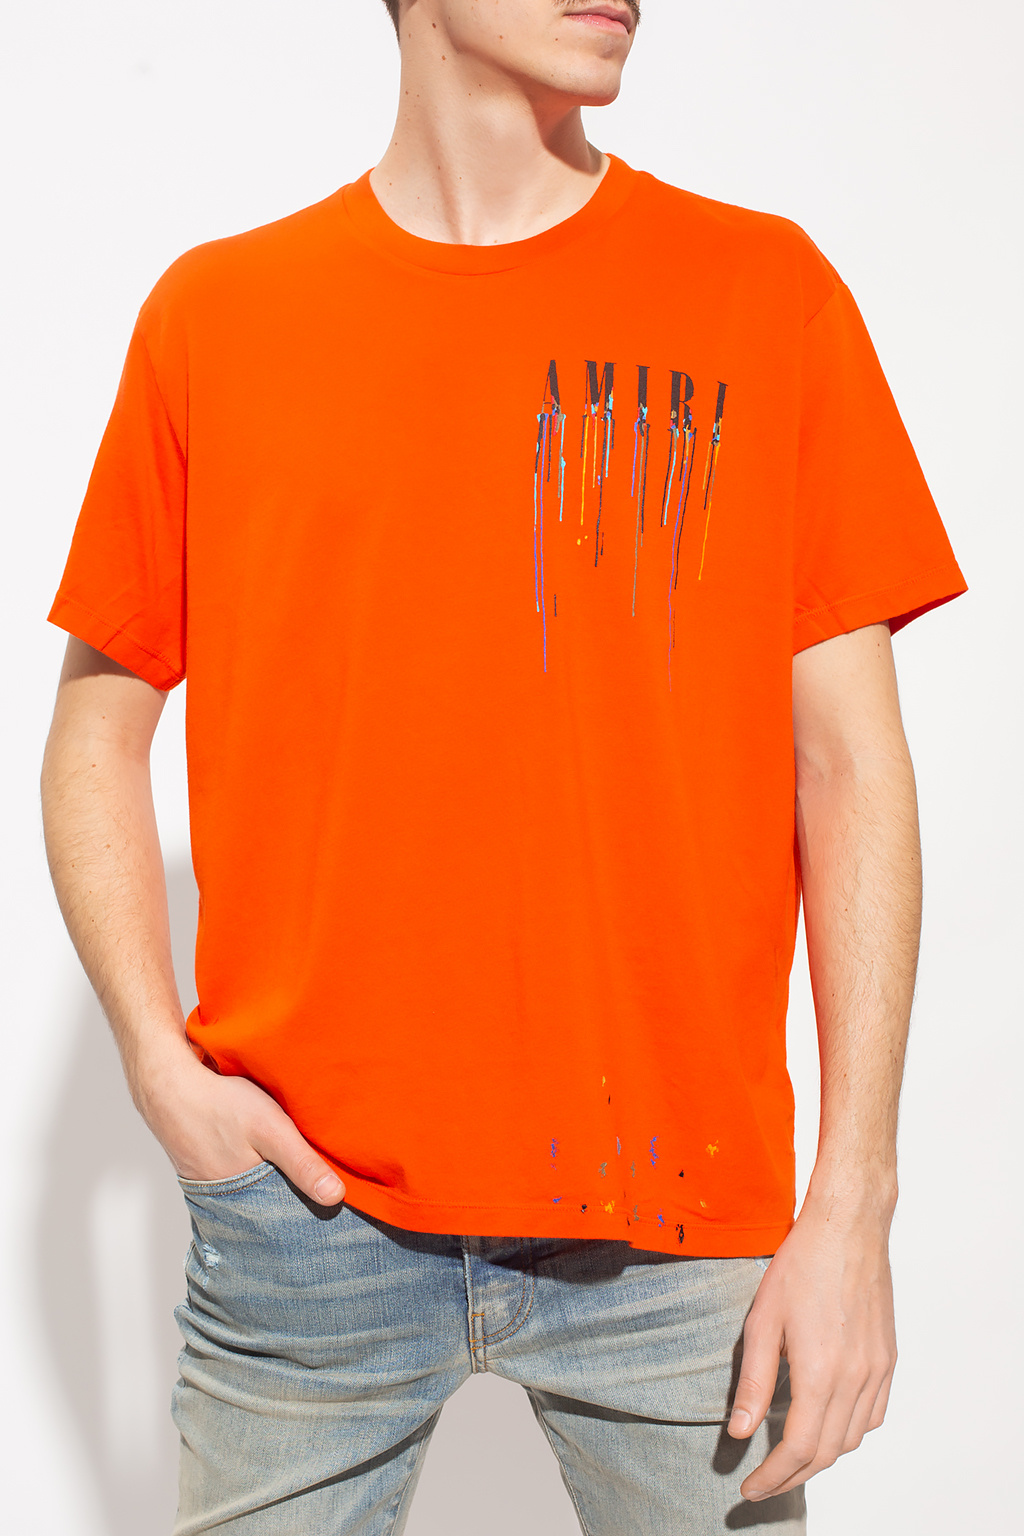 Nike Air Hooded Orange Wind Mens Amiri shirt - - Woven IetpShops logo with Guyana T Jacket 